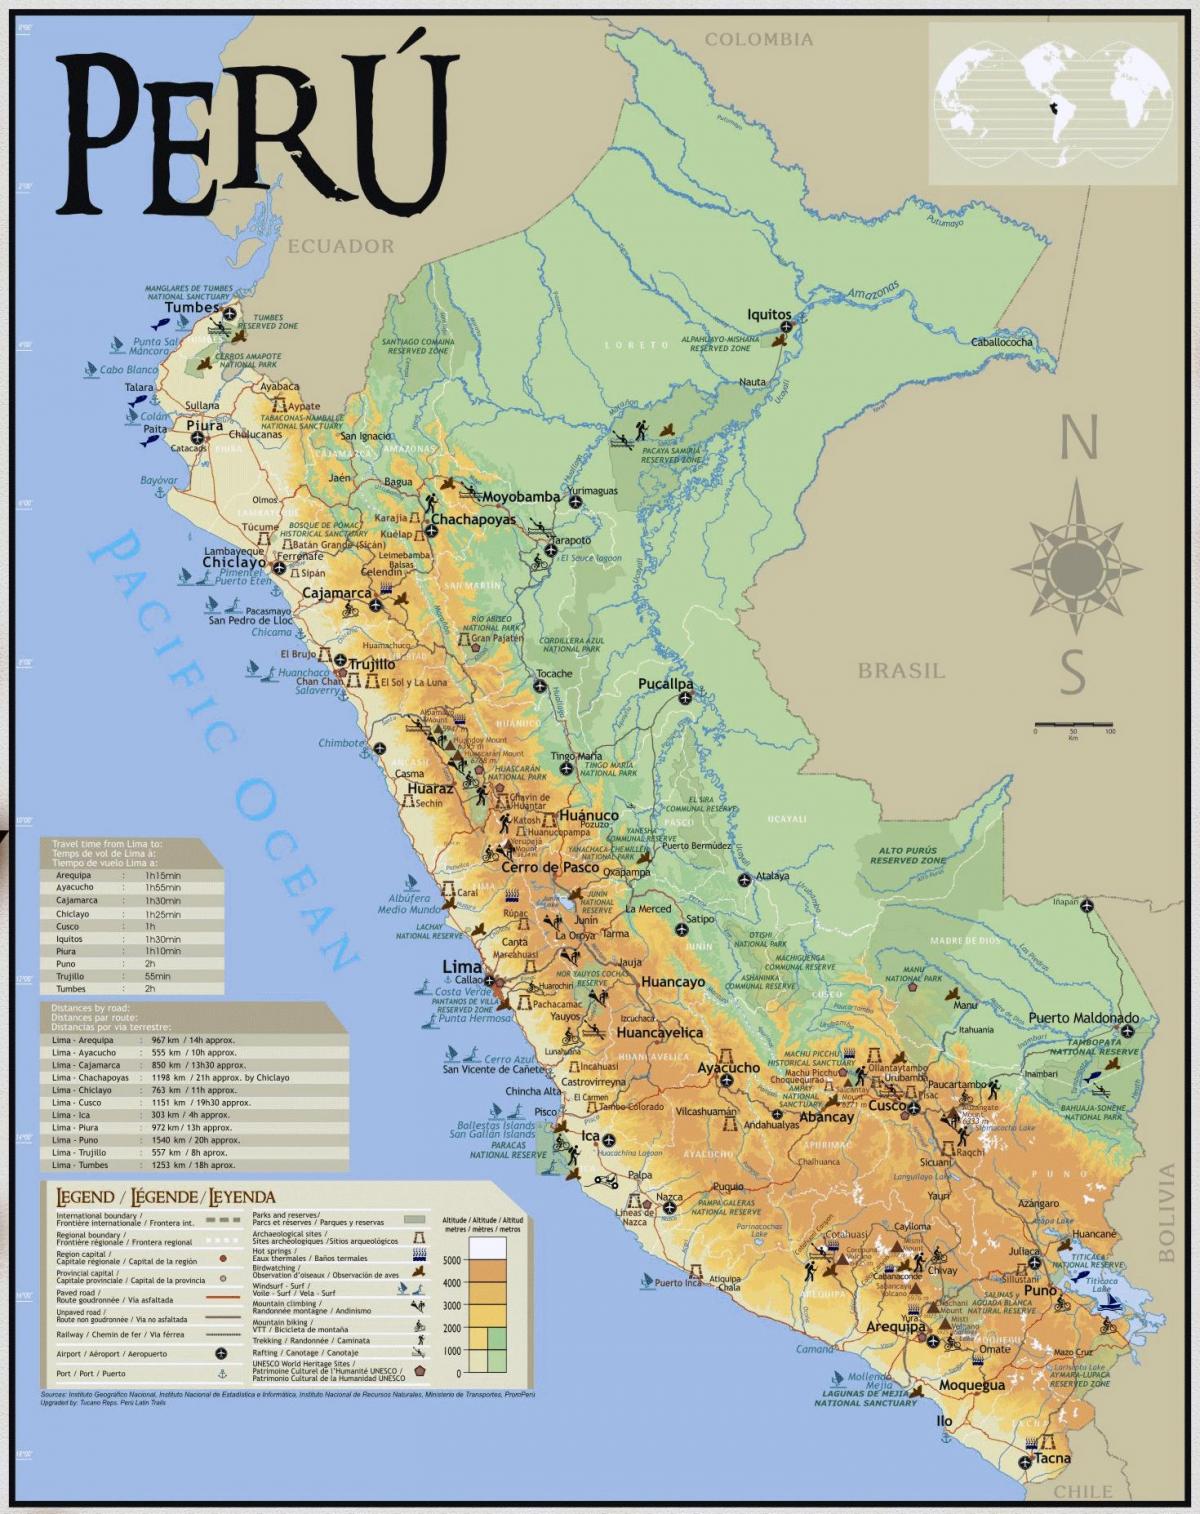 Peru tourist attractions map